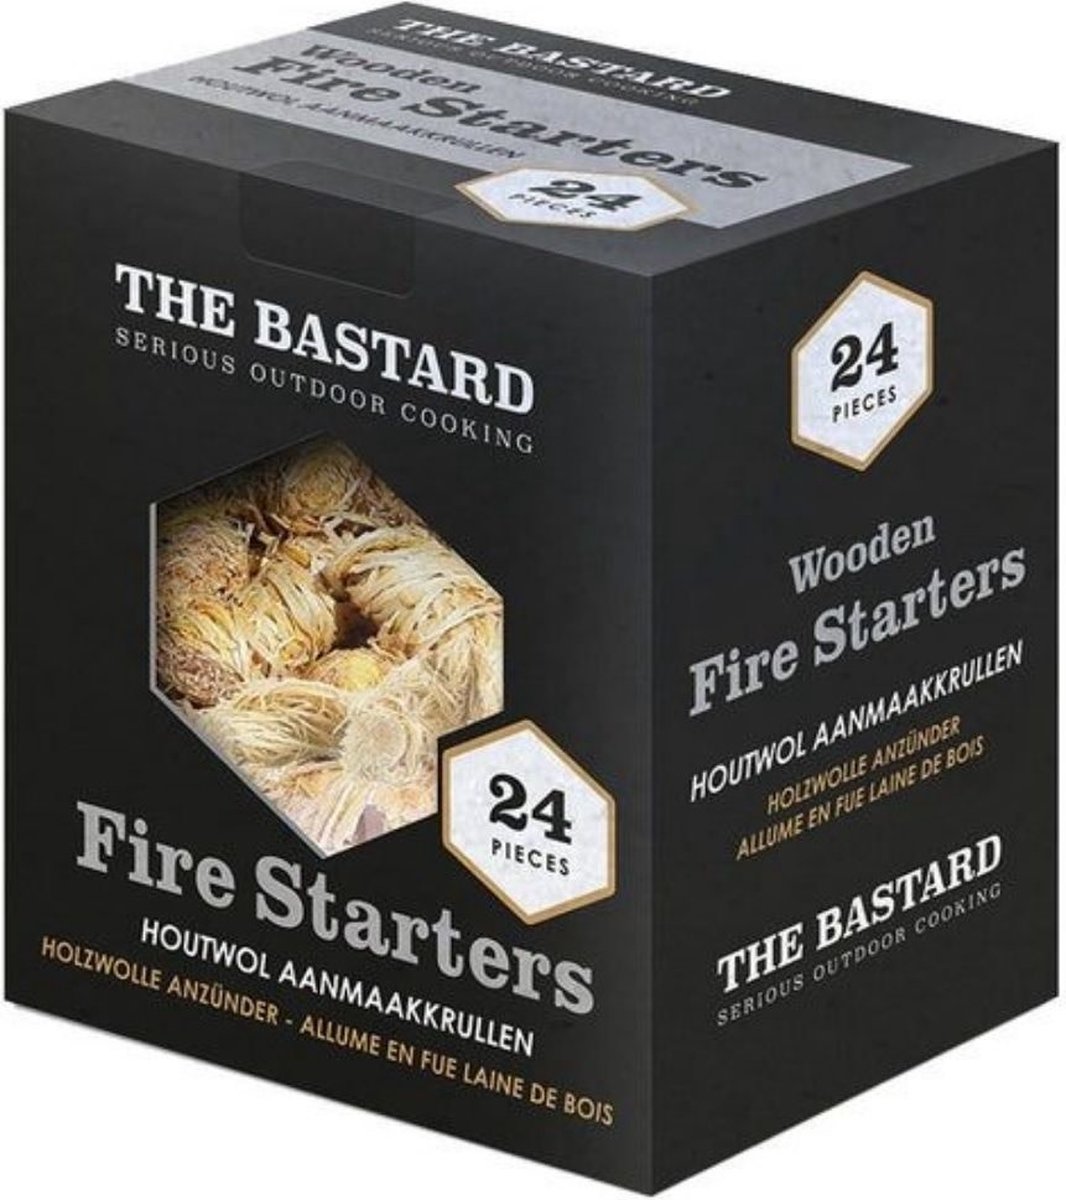 The Bastard Wooden Fire Starters - 24st 350gr - houtkrullen BBQ - houtwol aanmaakkrullen - The Bastard